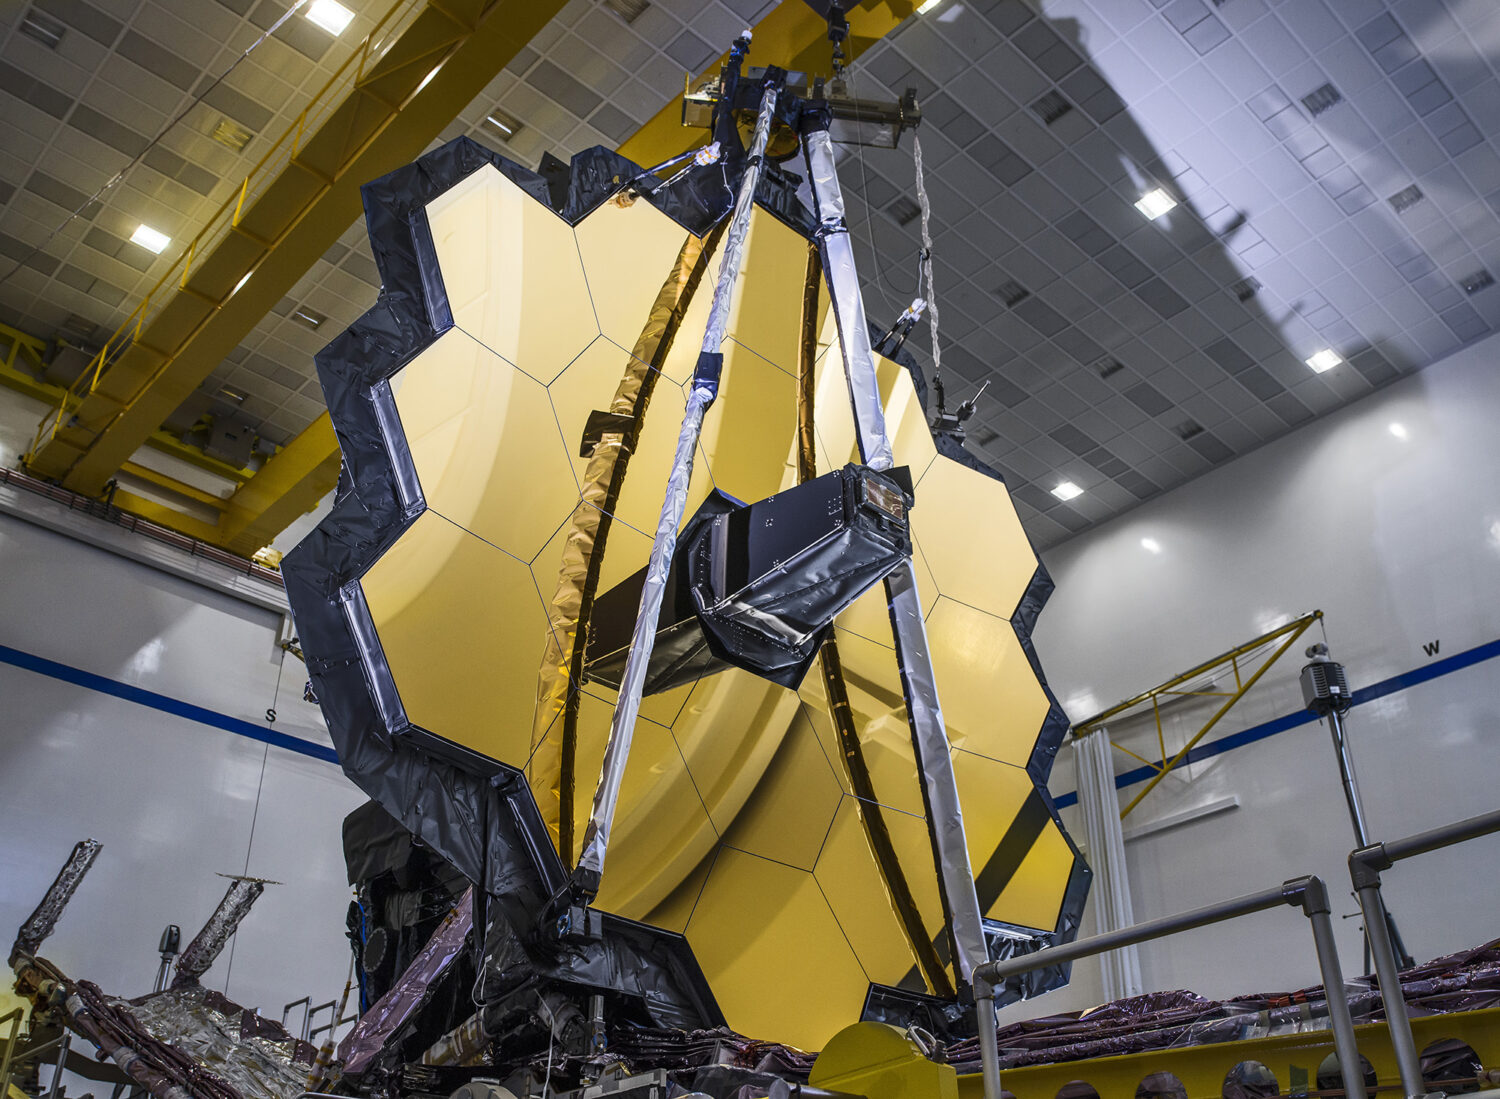 NASA’s James Webb Space Telescope launch: Live updates